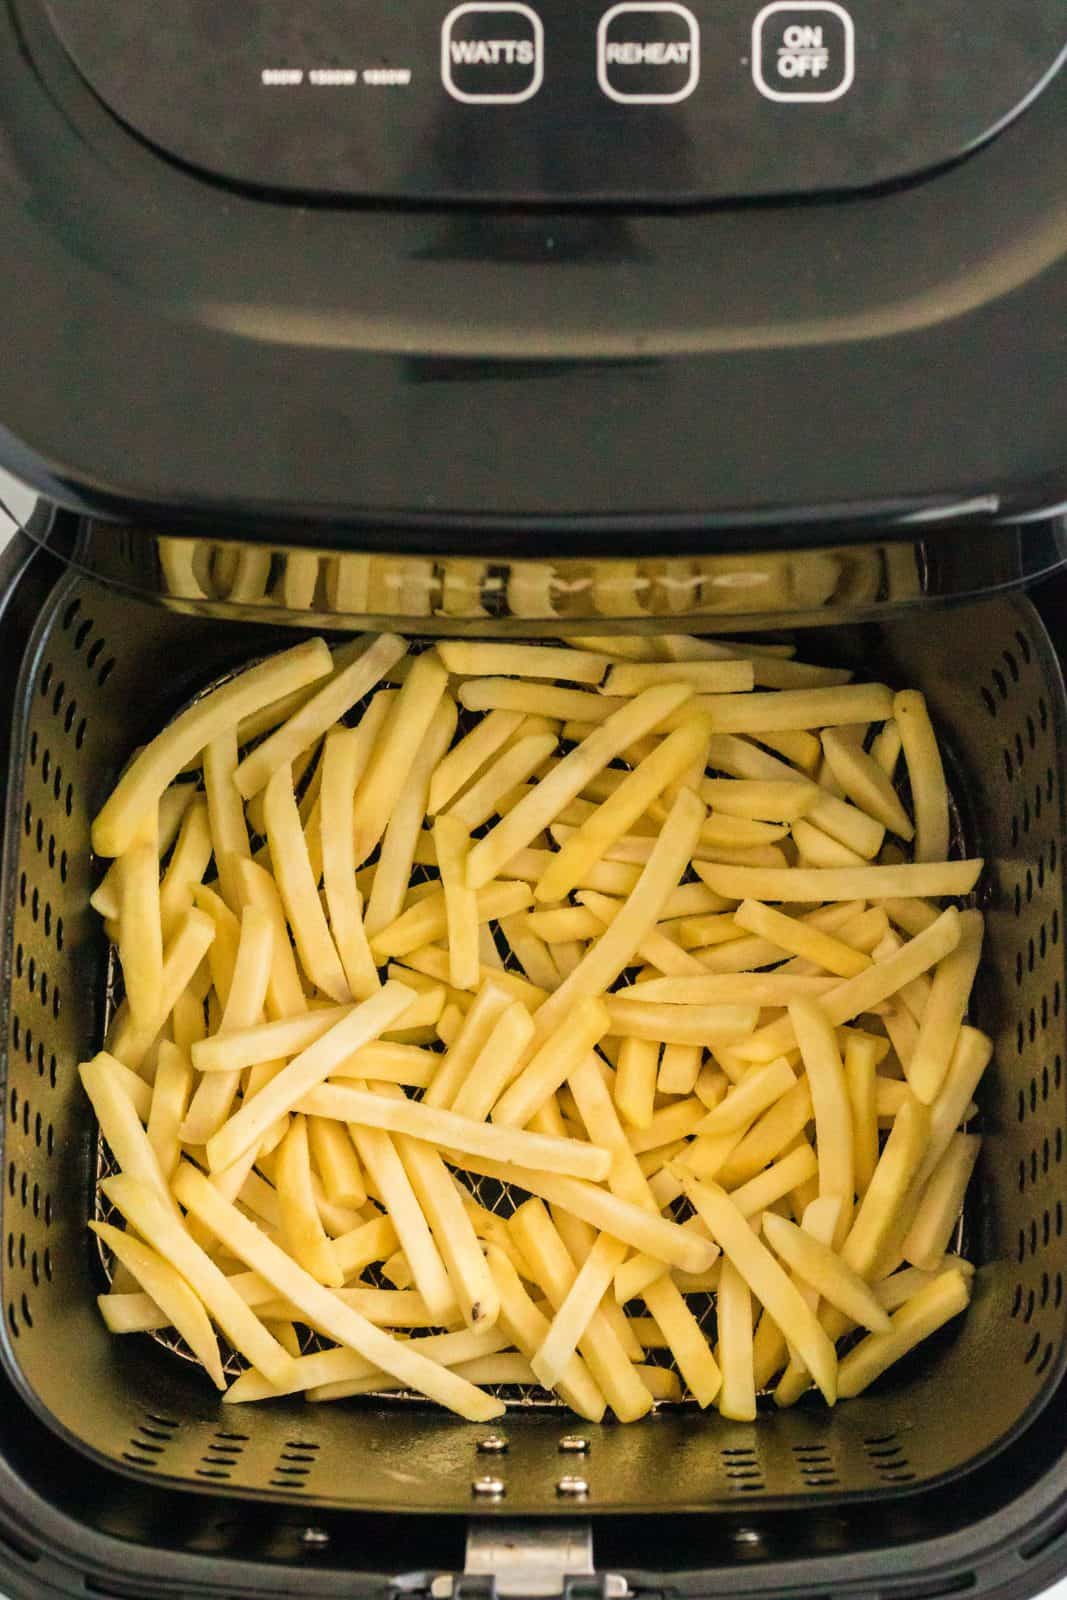 Frozen french fries in air fryer.